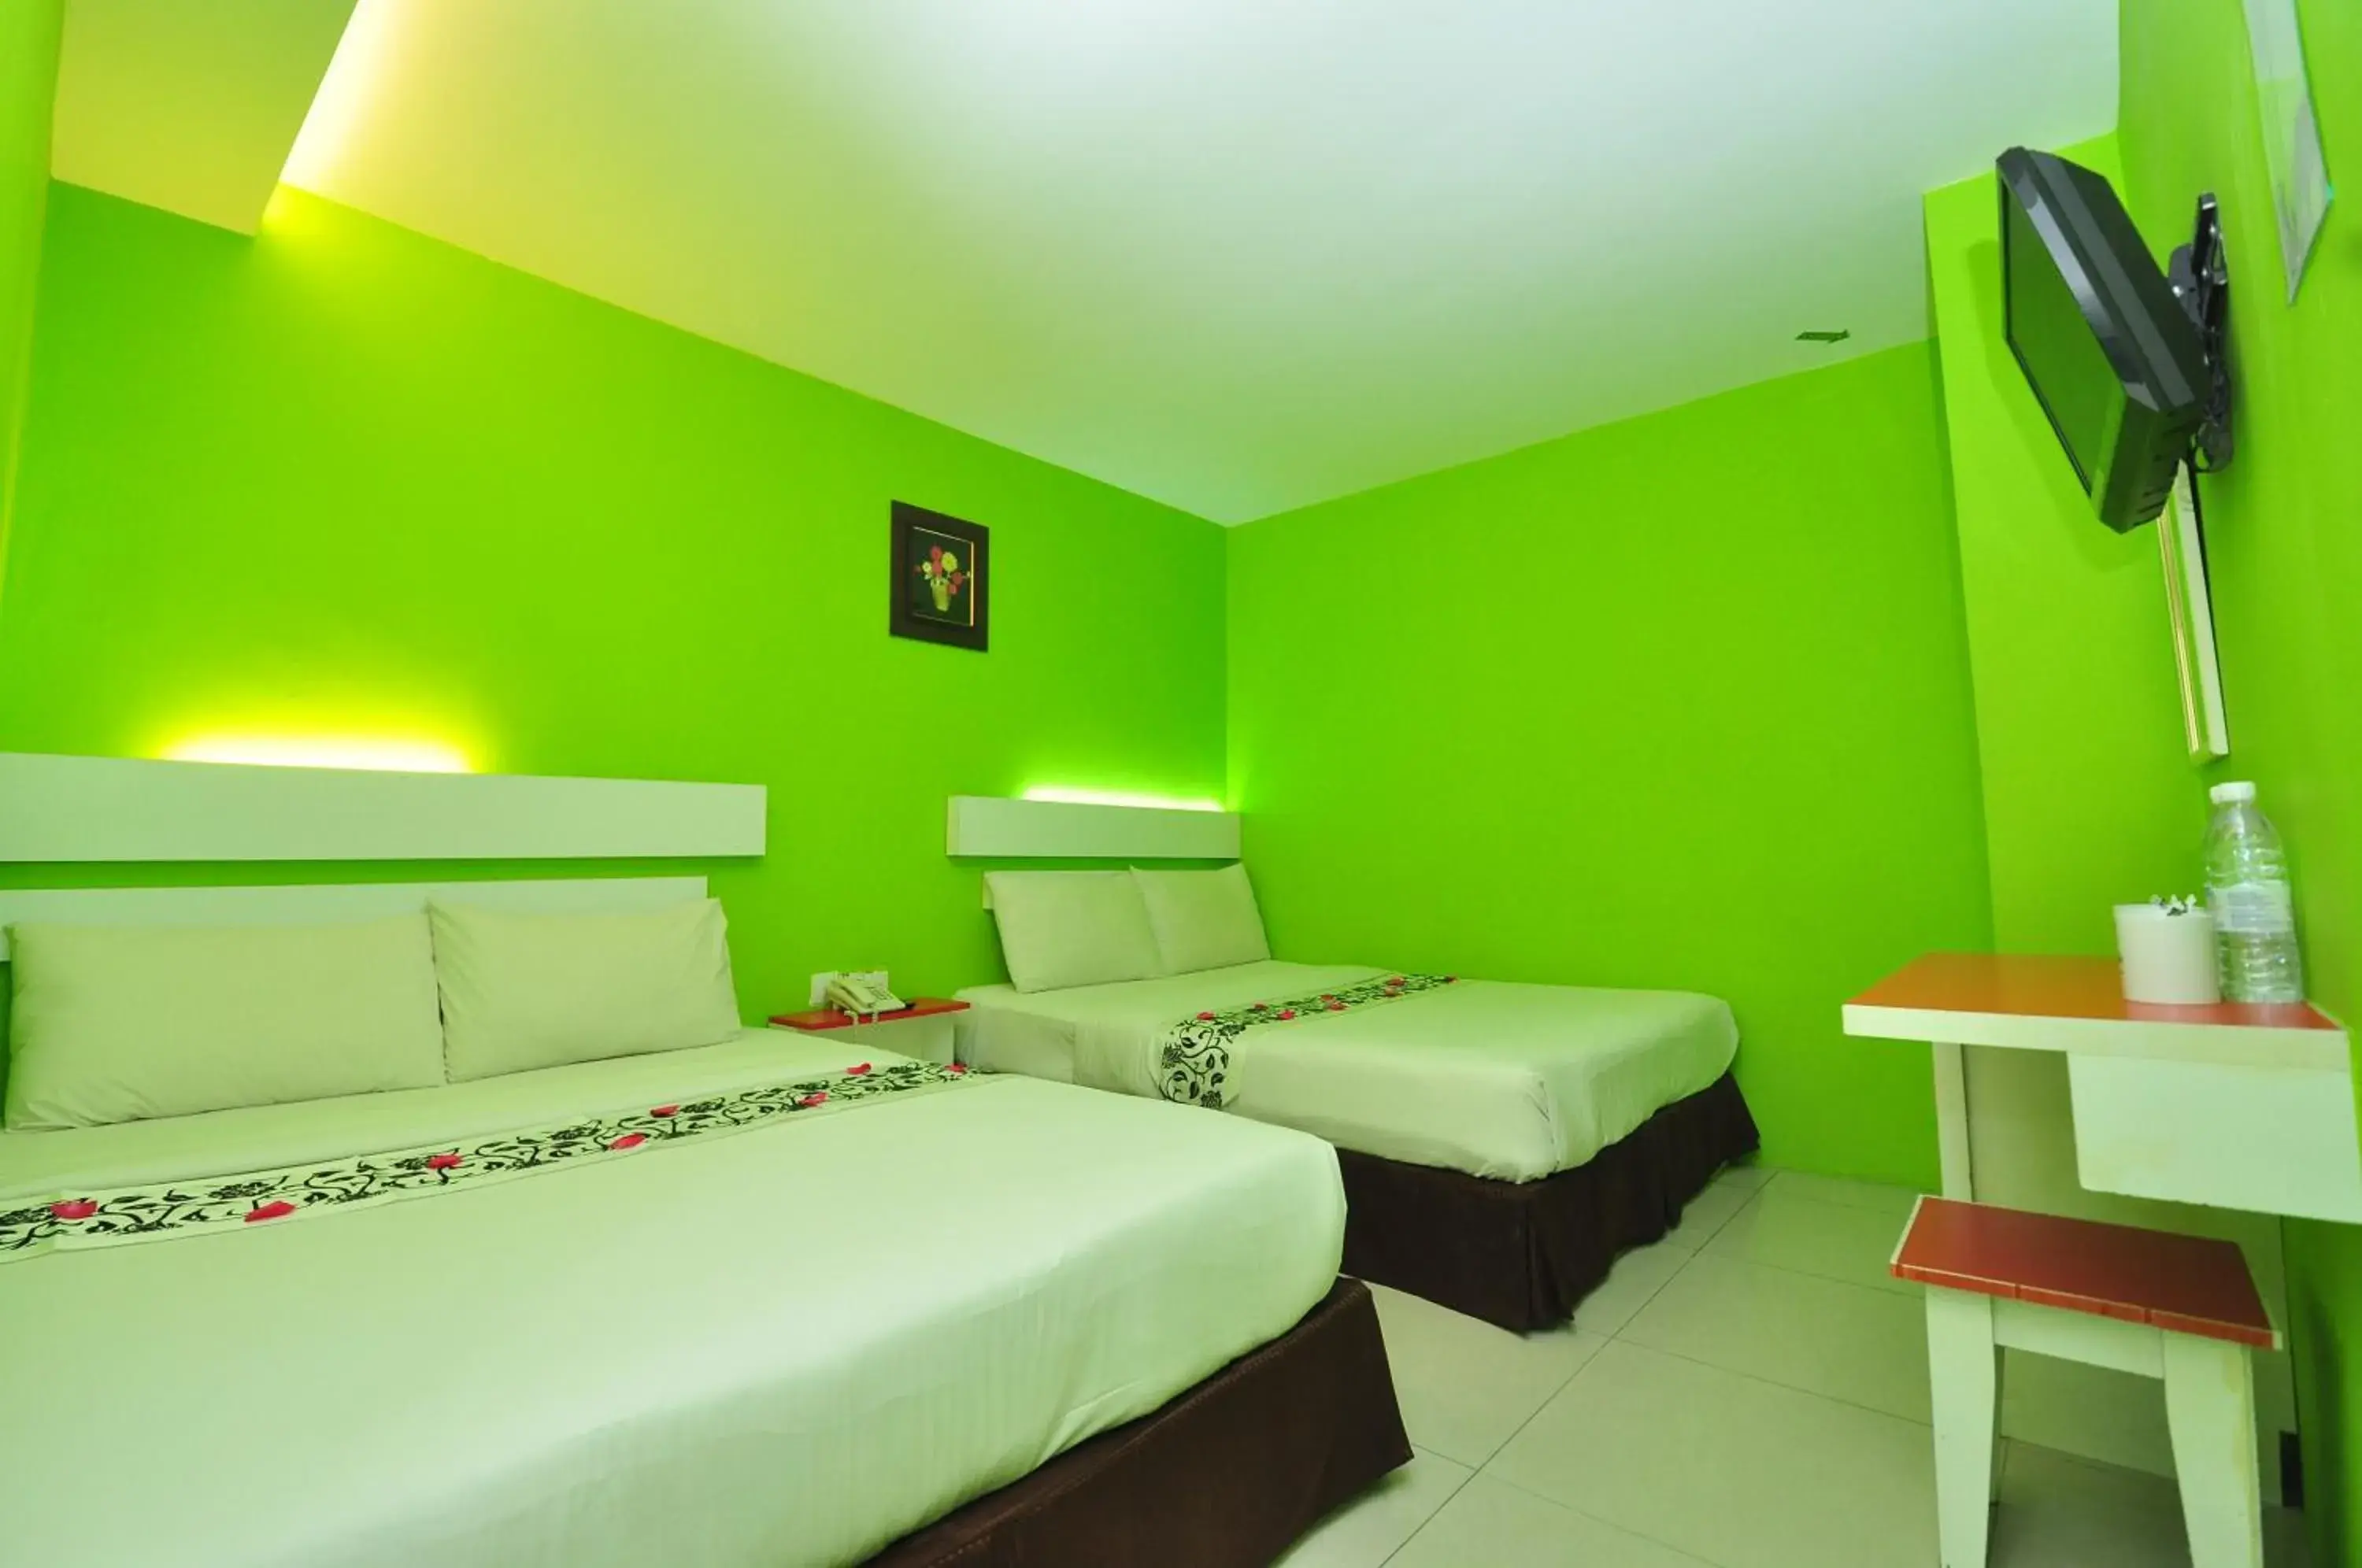 Bed in Best View Hotel Ss2 Petaling Jaya